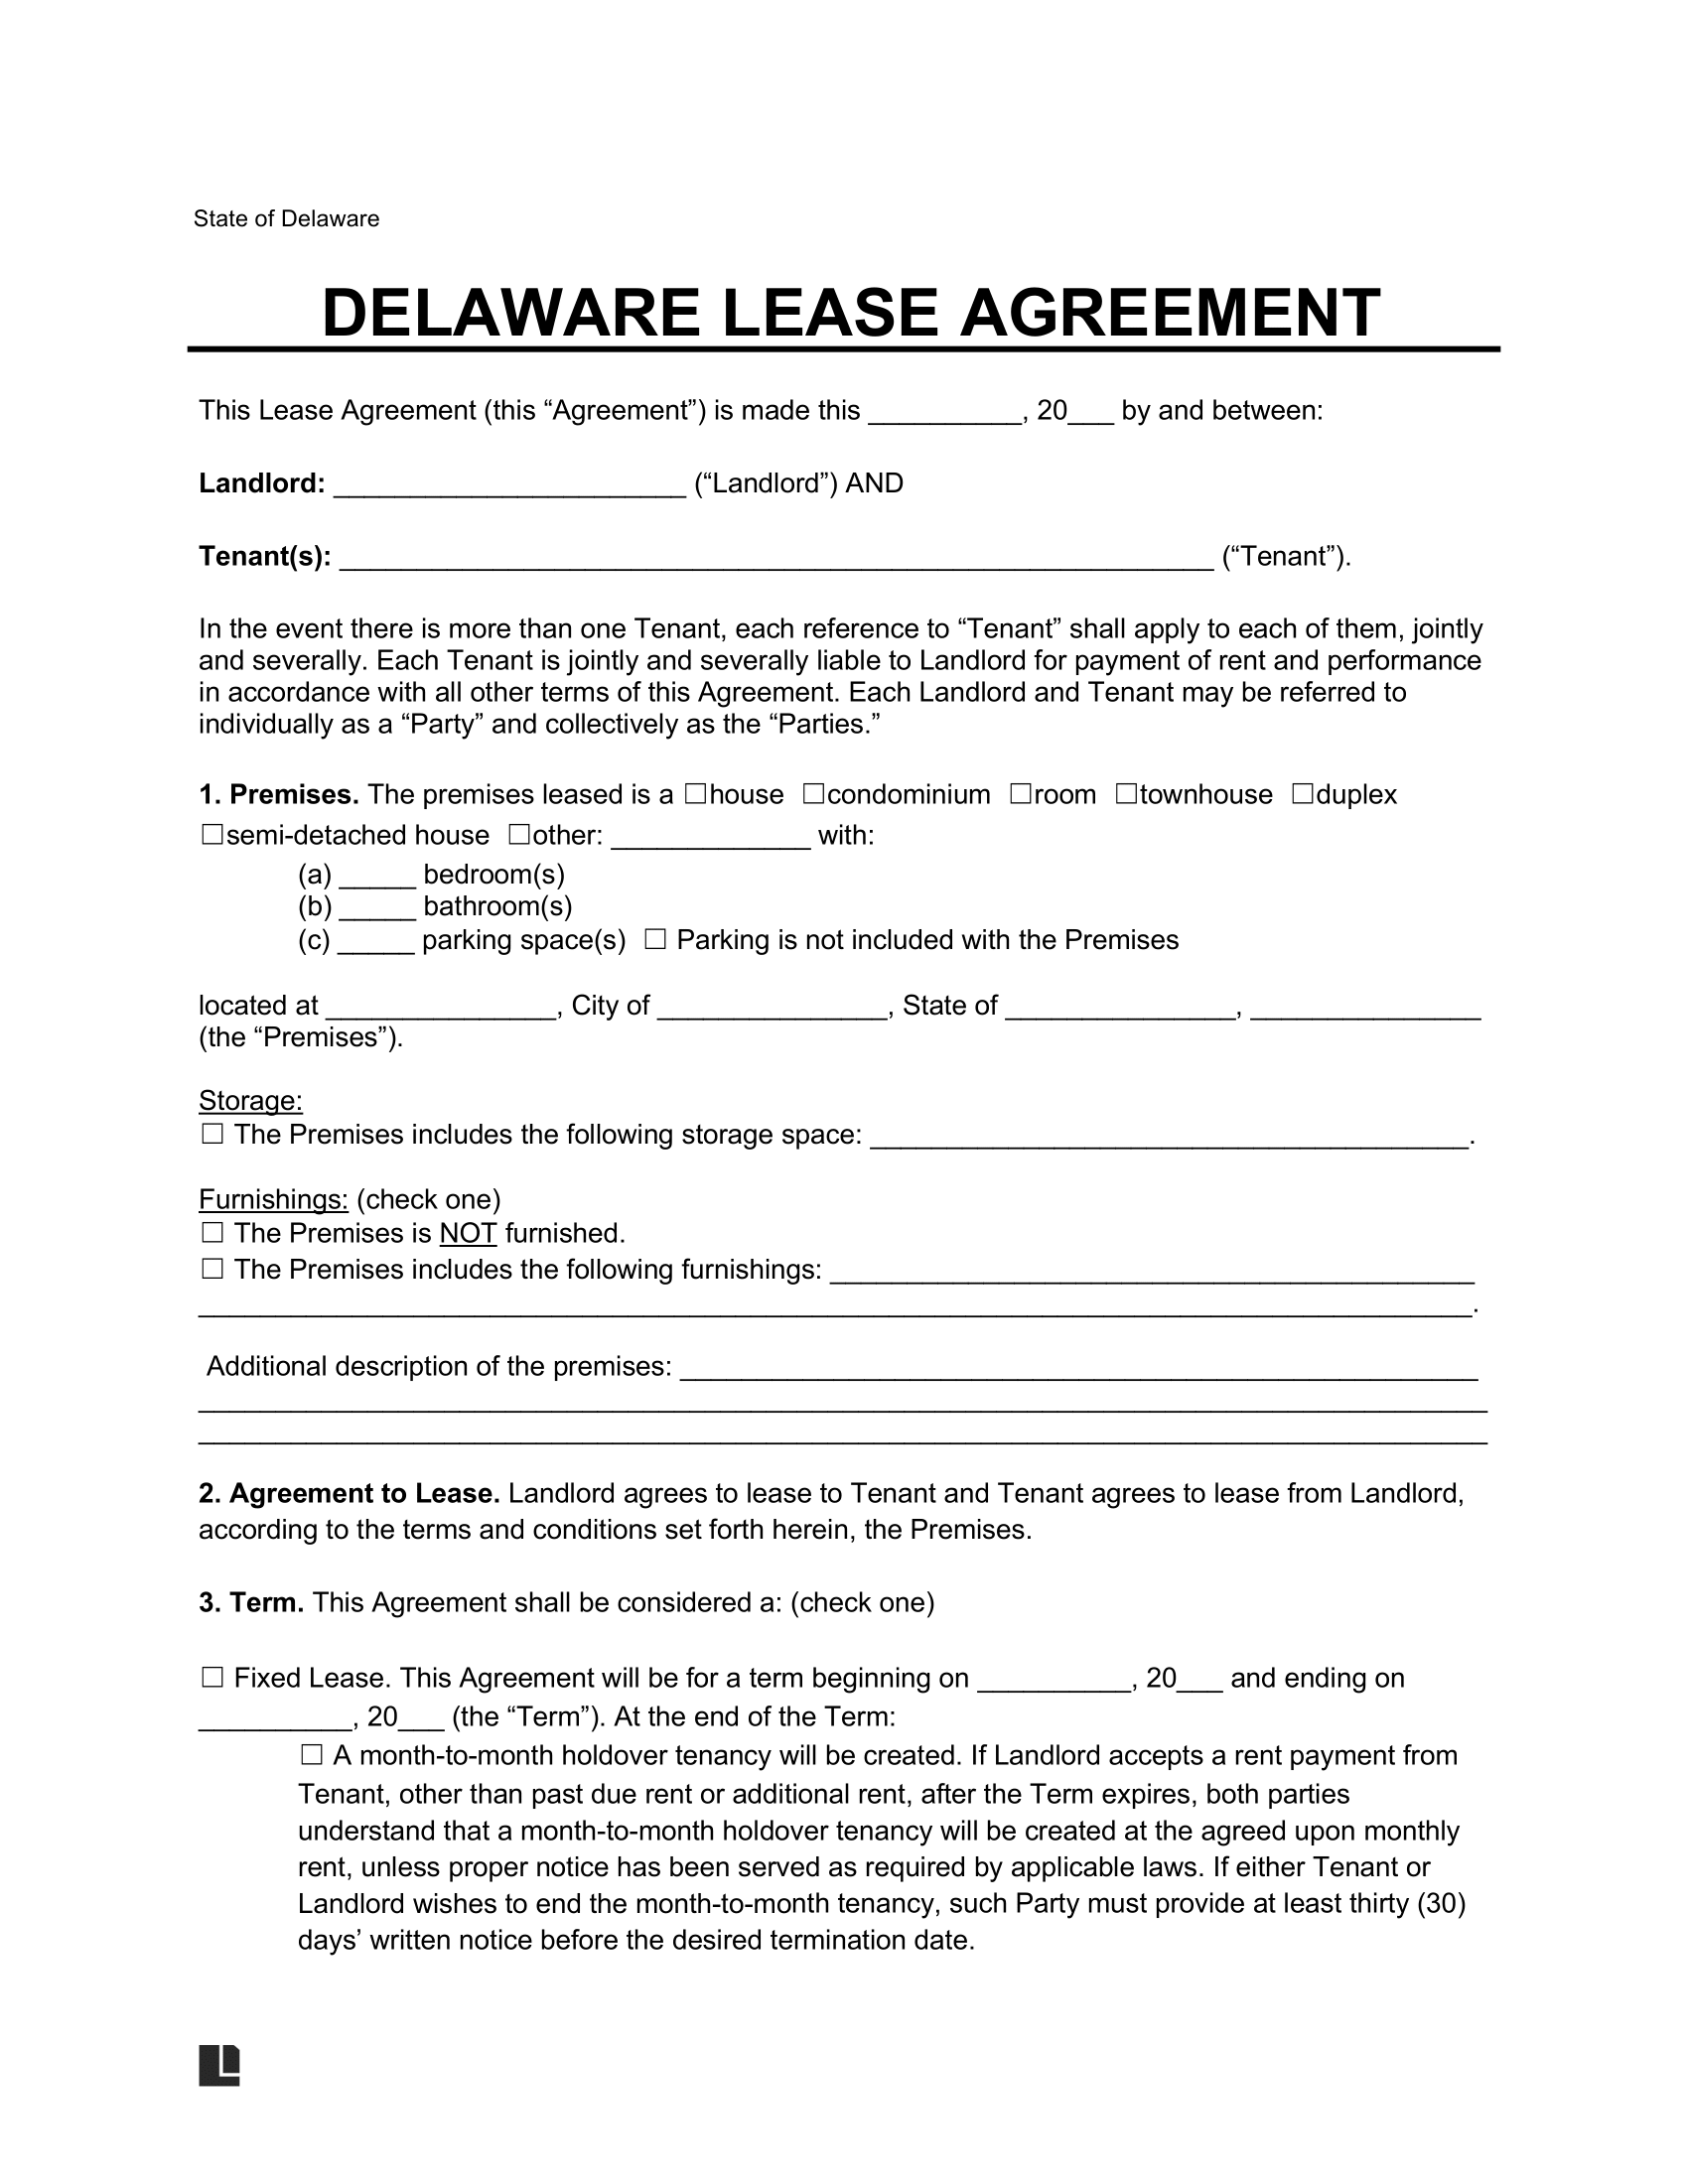 Delaware Residential Lease Agreement